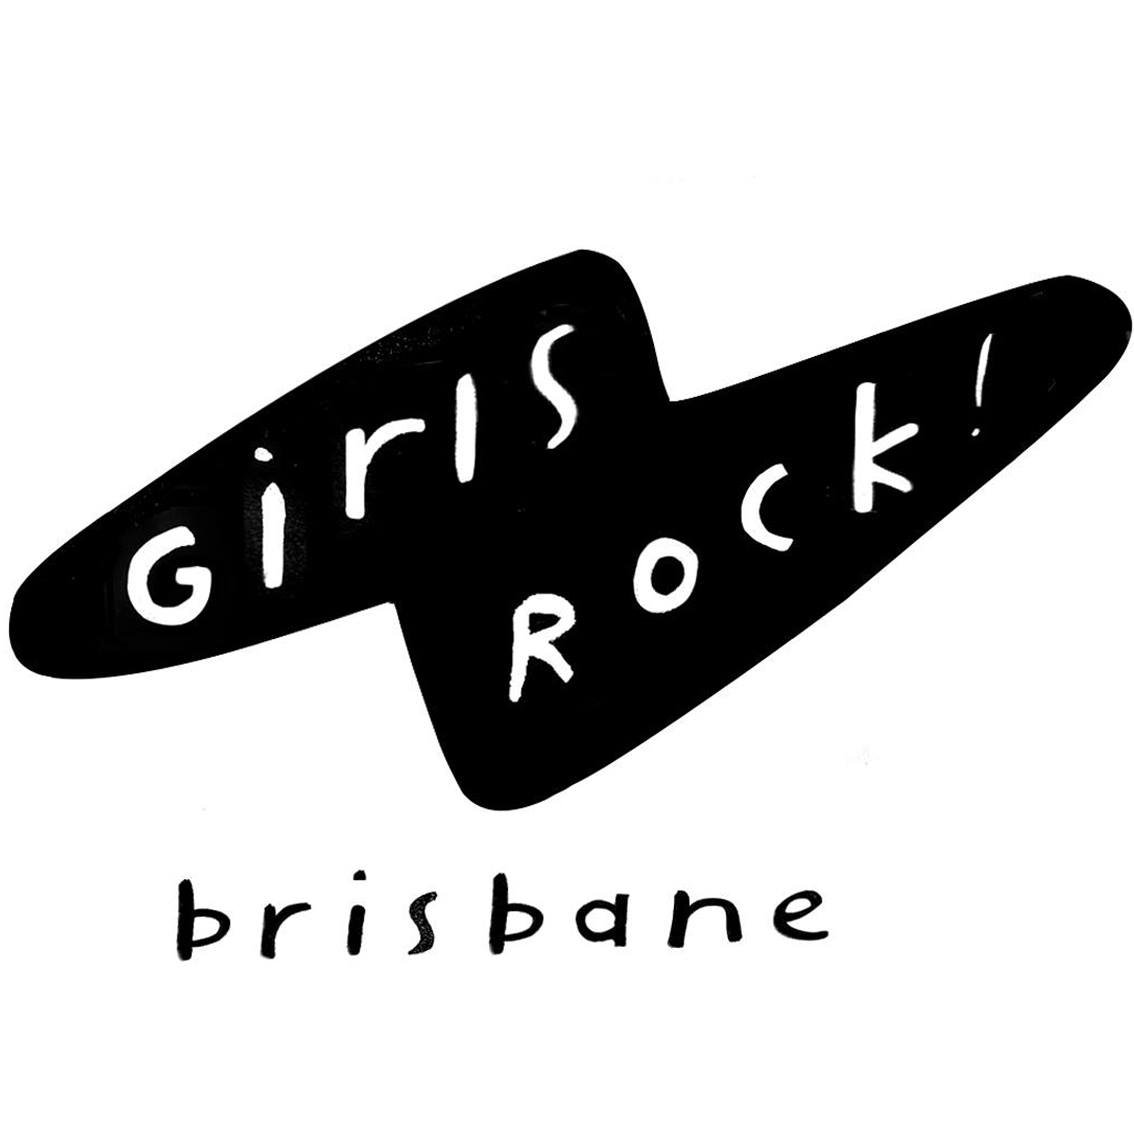 Girls Rock! empowers girls (10-17yo) through a week-long mentorship program that encourages creativity, self-expression and teamwork through music.